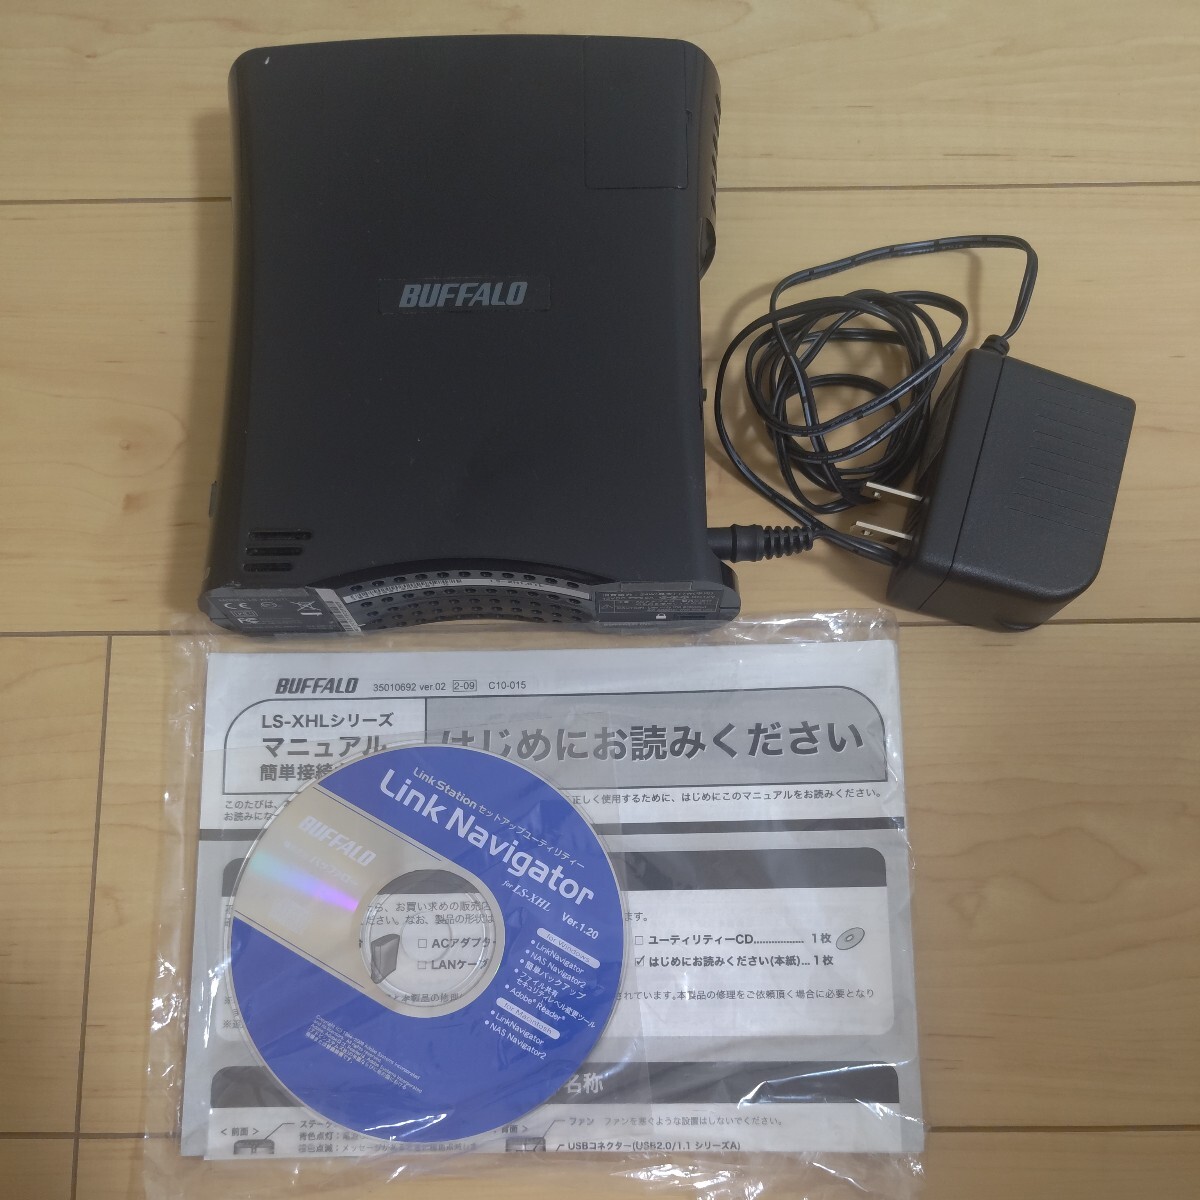 BUFFALO Buffalo беспроводной LAN маршрутизатор Wi-Fi NAS 1TB комплект 